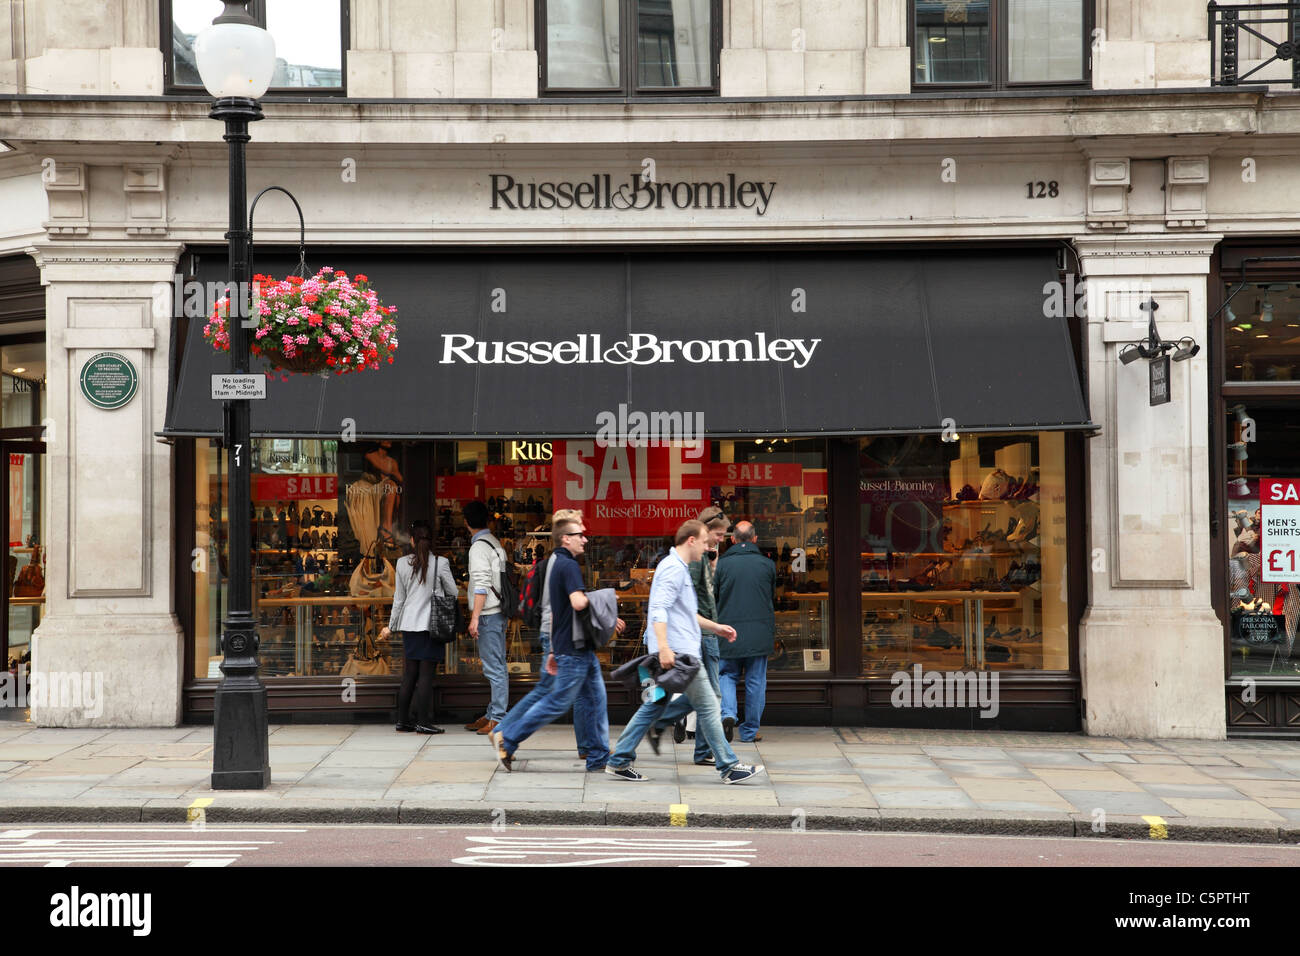 A Russell & Bromley shoe shop on Regent Street, London, England, U.K. Stock Photo